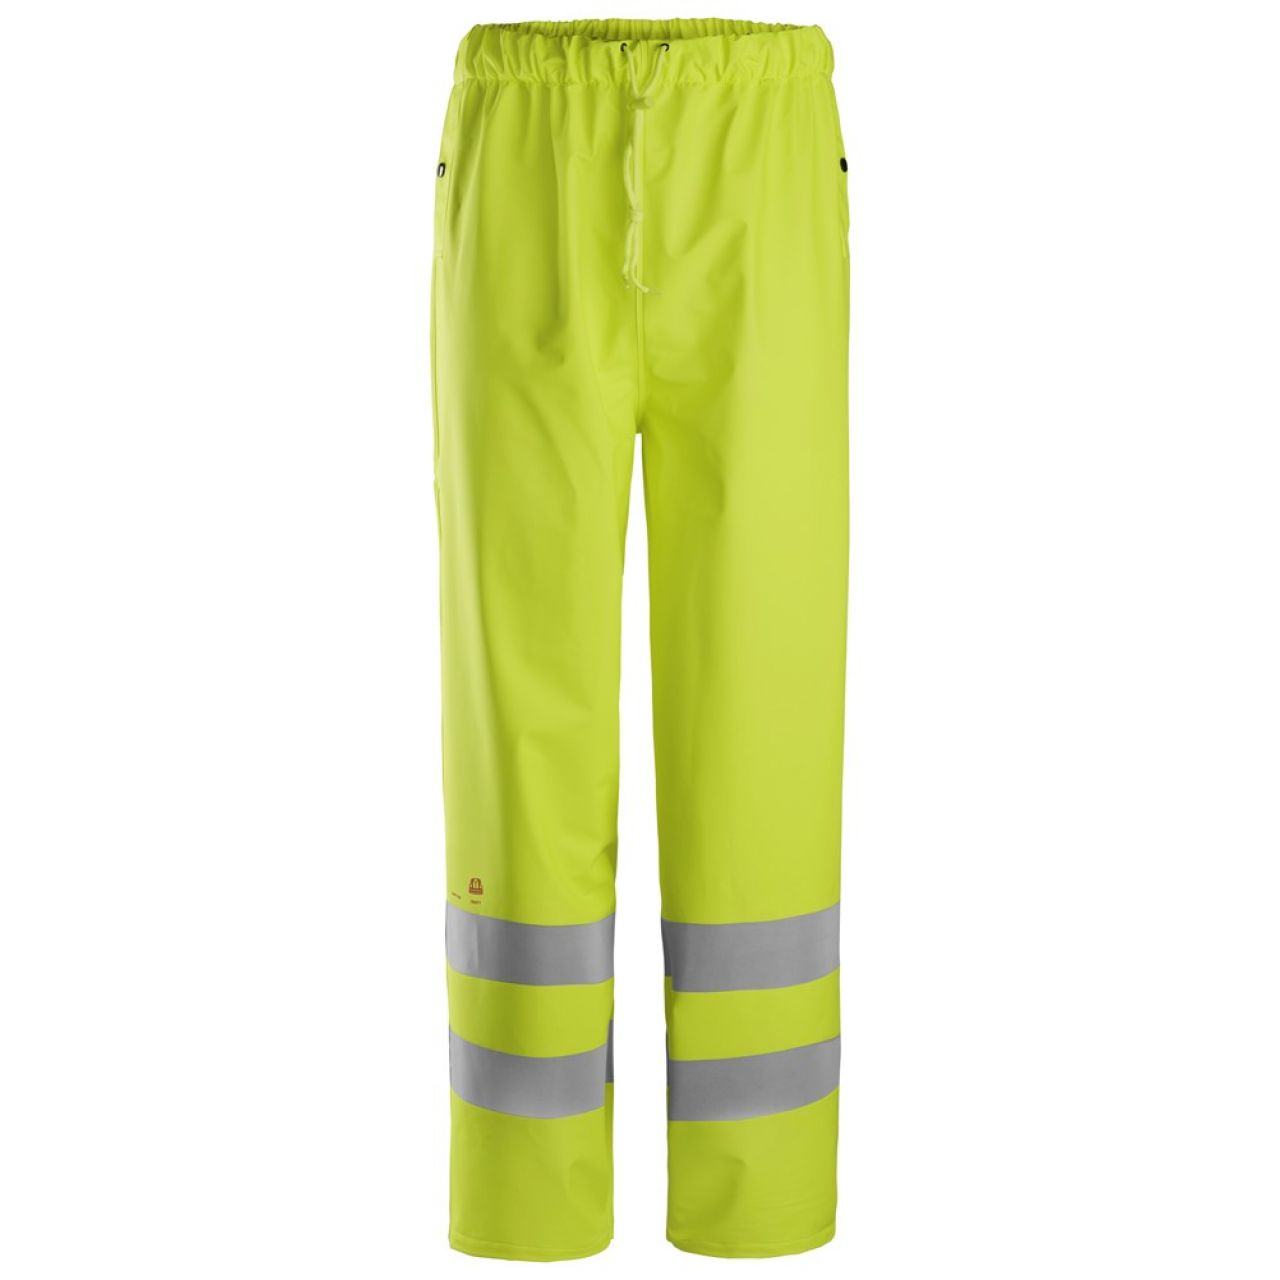 8267 Pantalones largos impermeables PU de alta visibilidad clase 2 ProtecWork amarillo talla 3XL